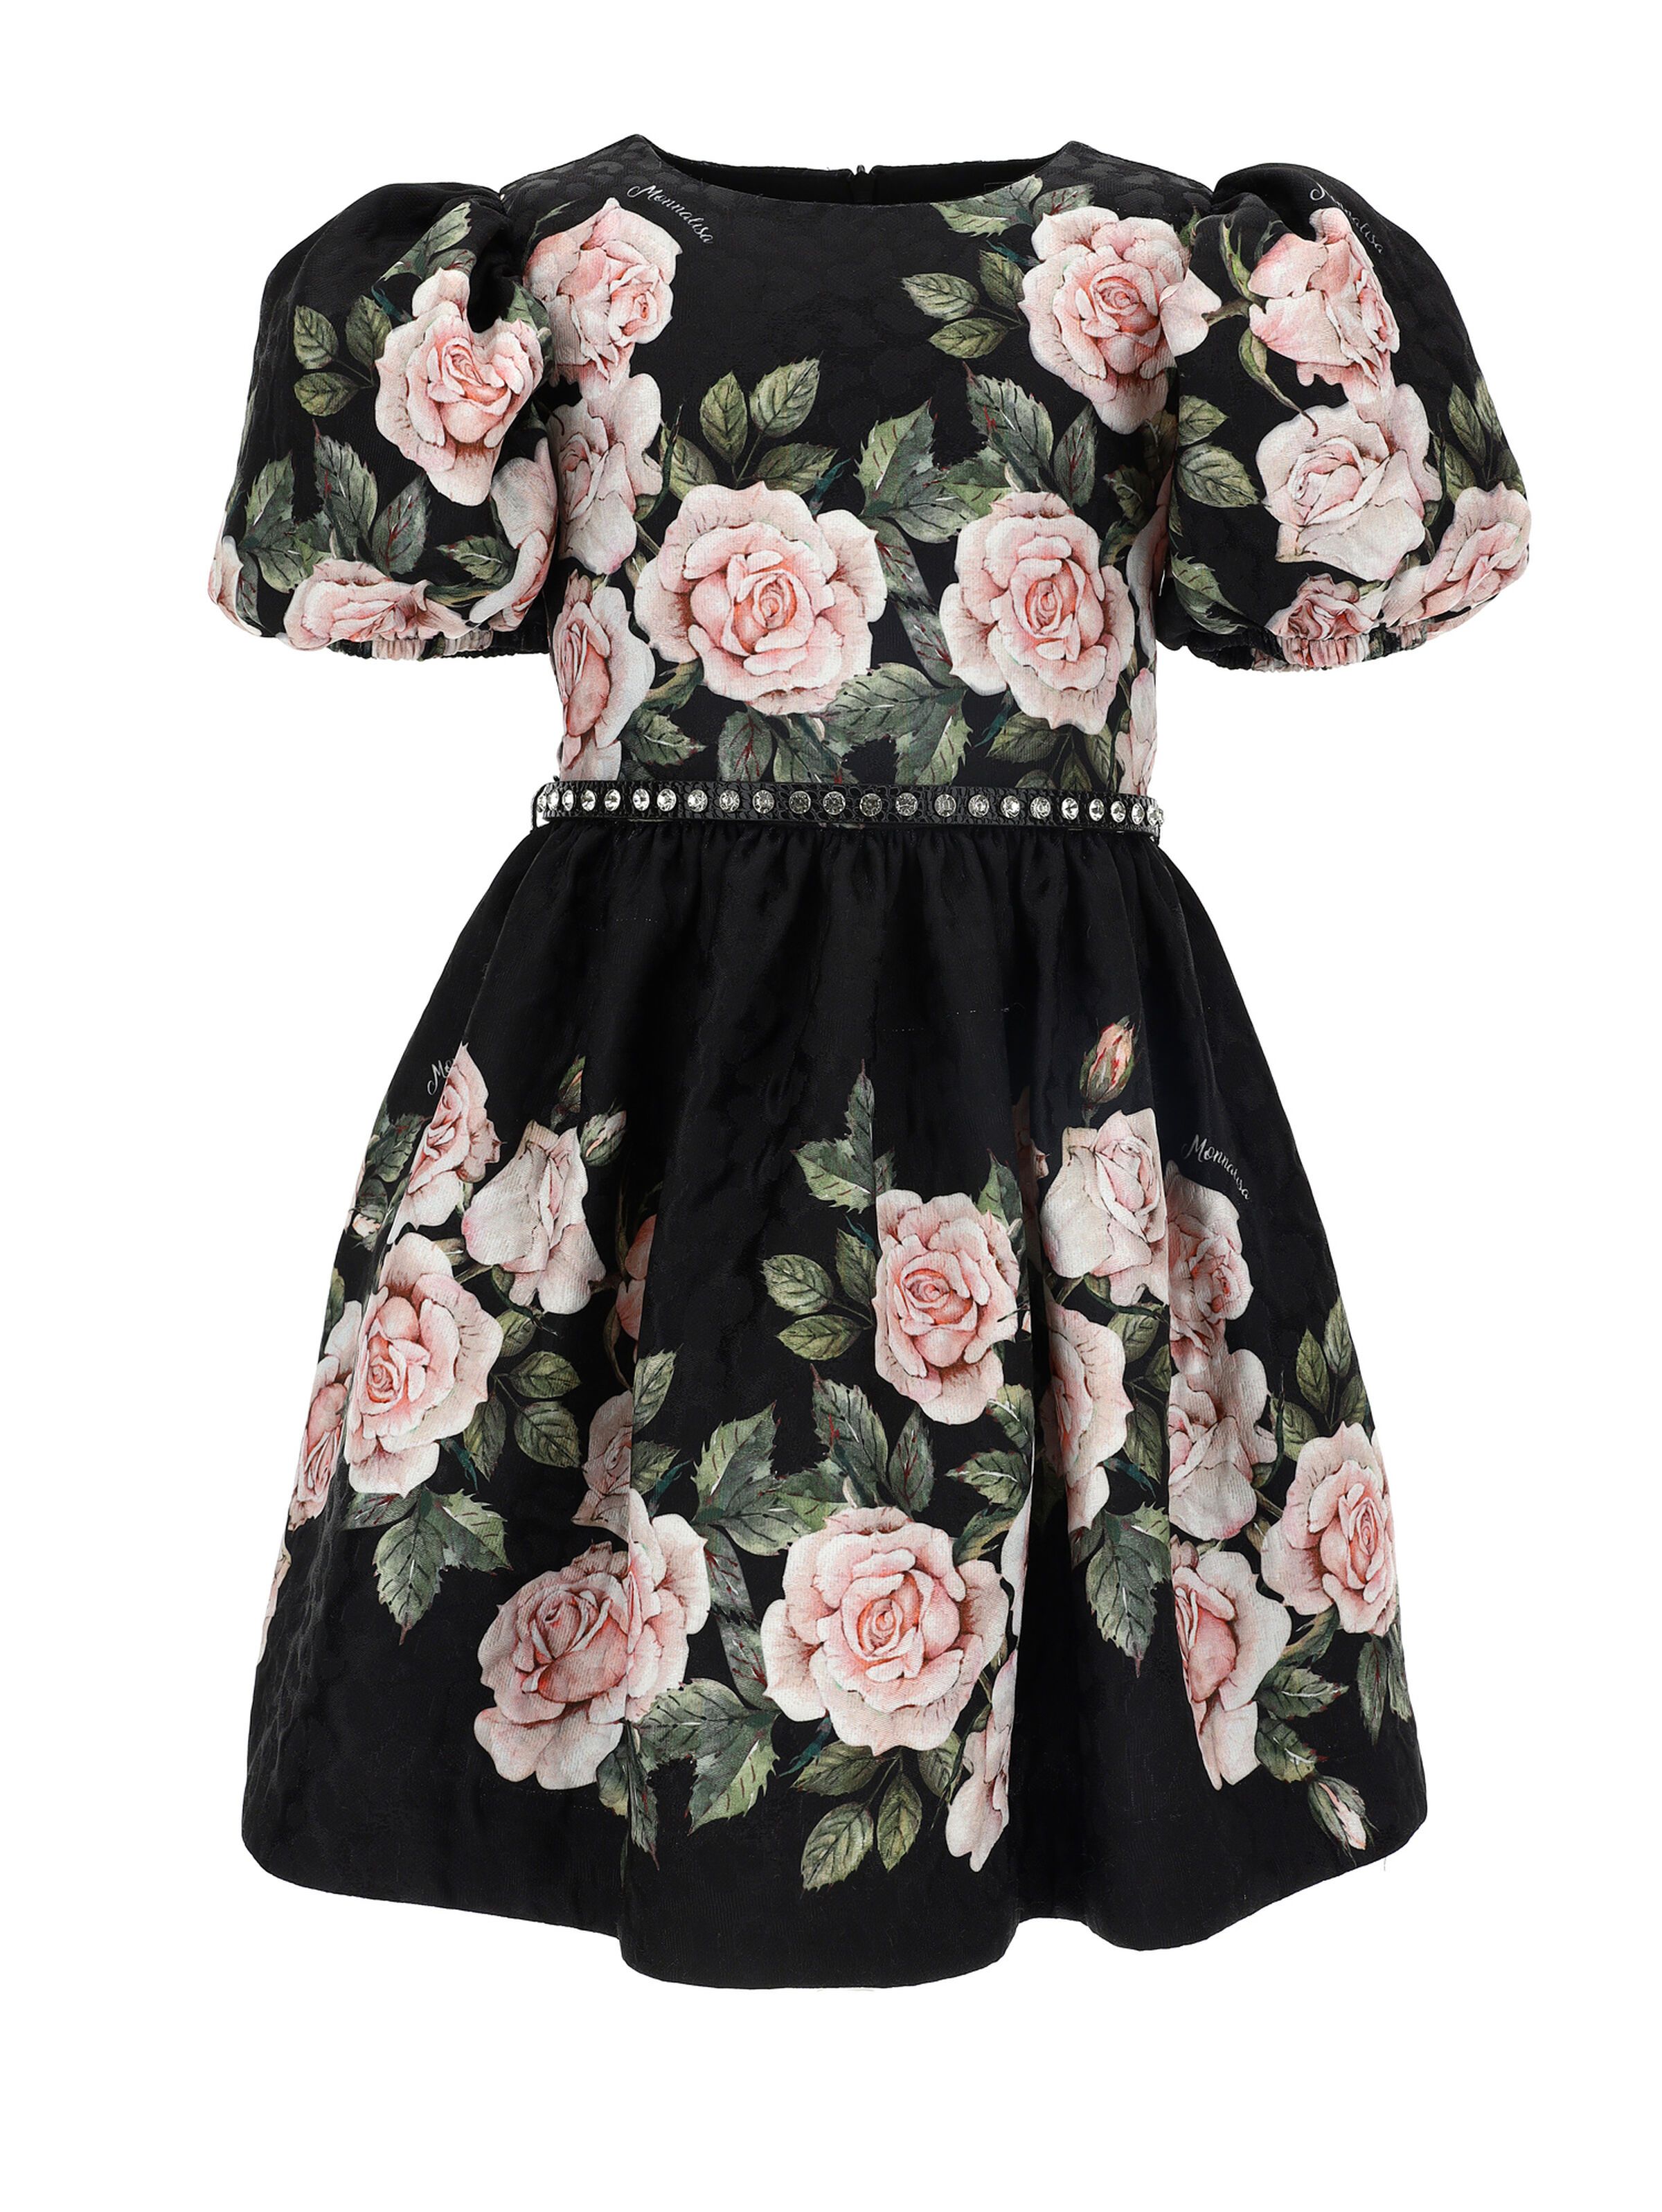 Brocade dress with roses | Monnalisa